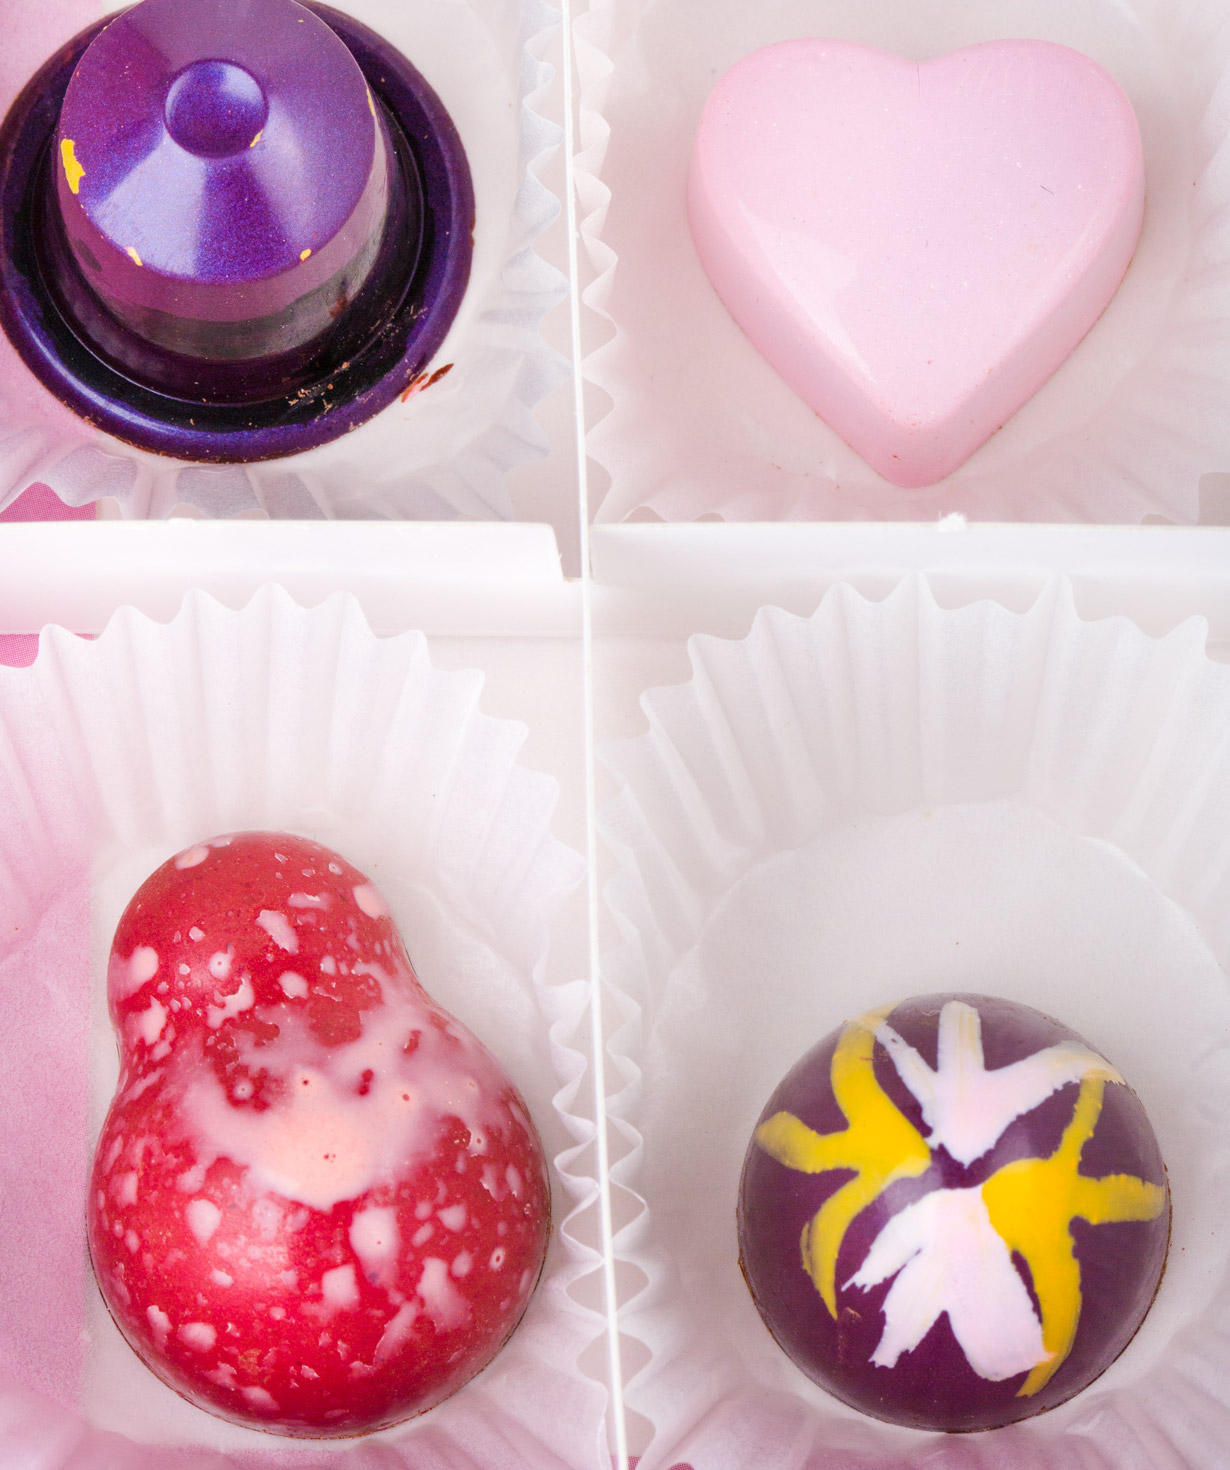 Chocolate collection `Lara Chocolate` pink